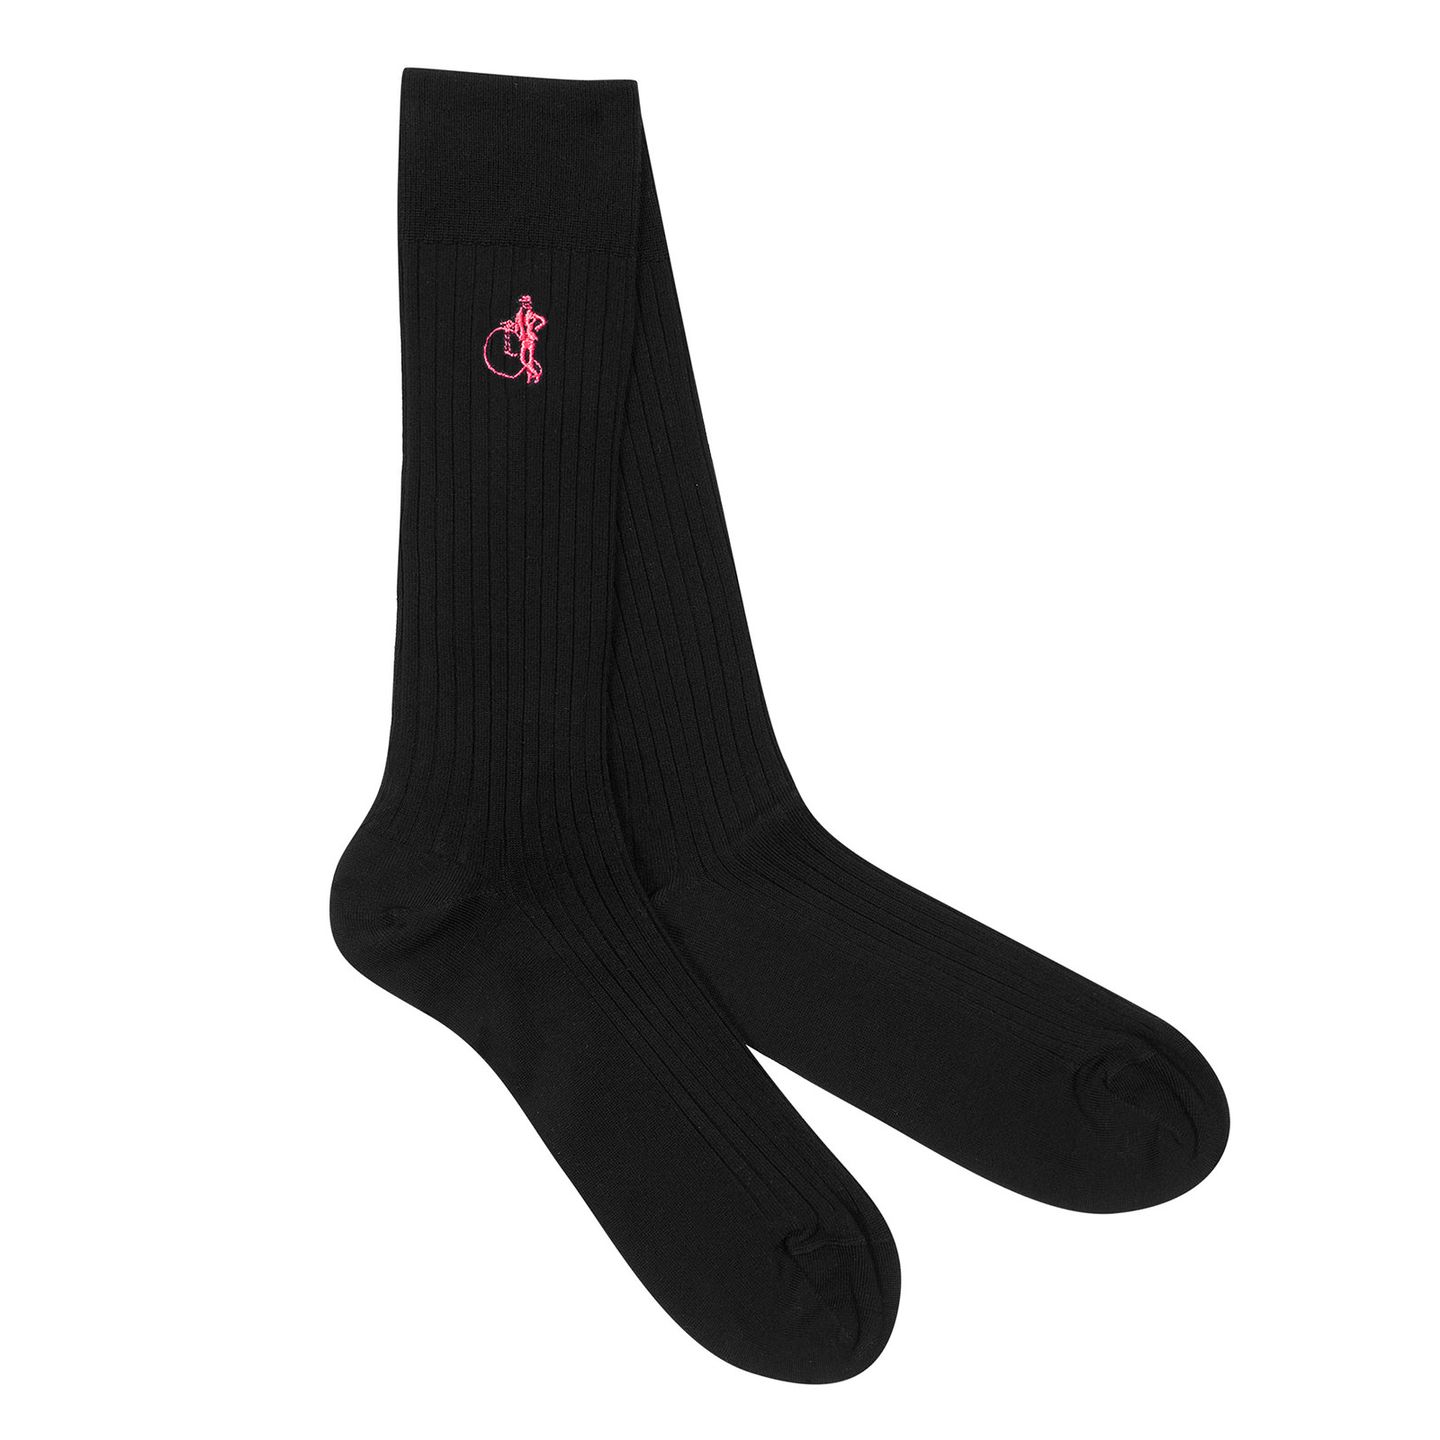 Black socks with alternative pink London Sock Company logo embroidered